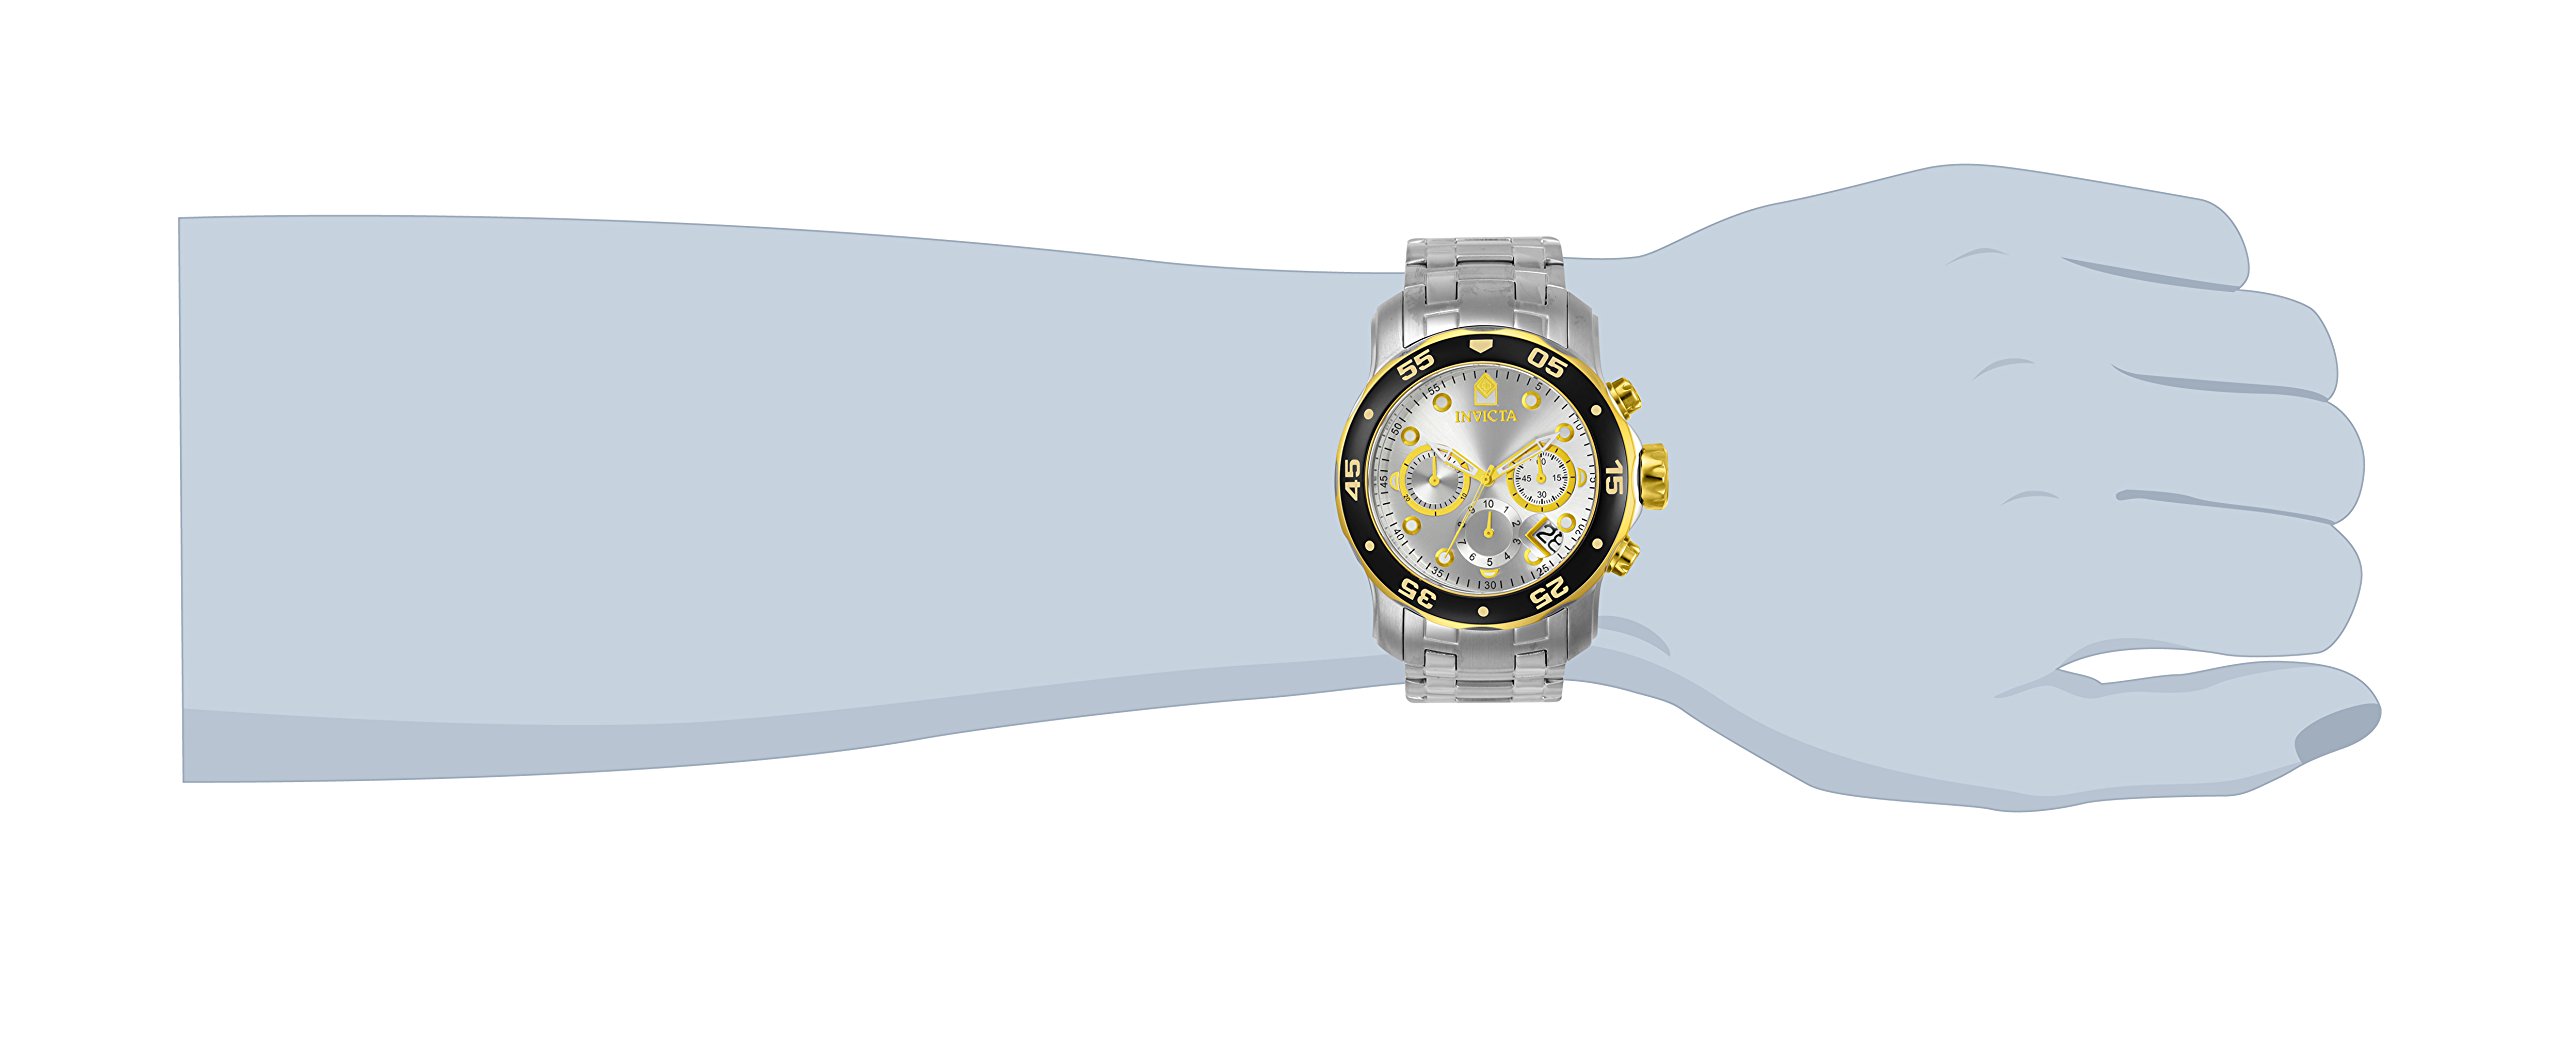 Invicta Men's 80040 Pro Diver Analog Display Swiss Quartz Silver Watch